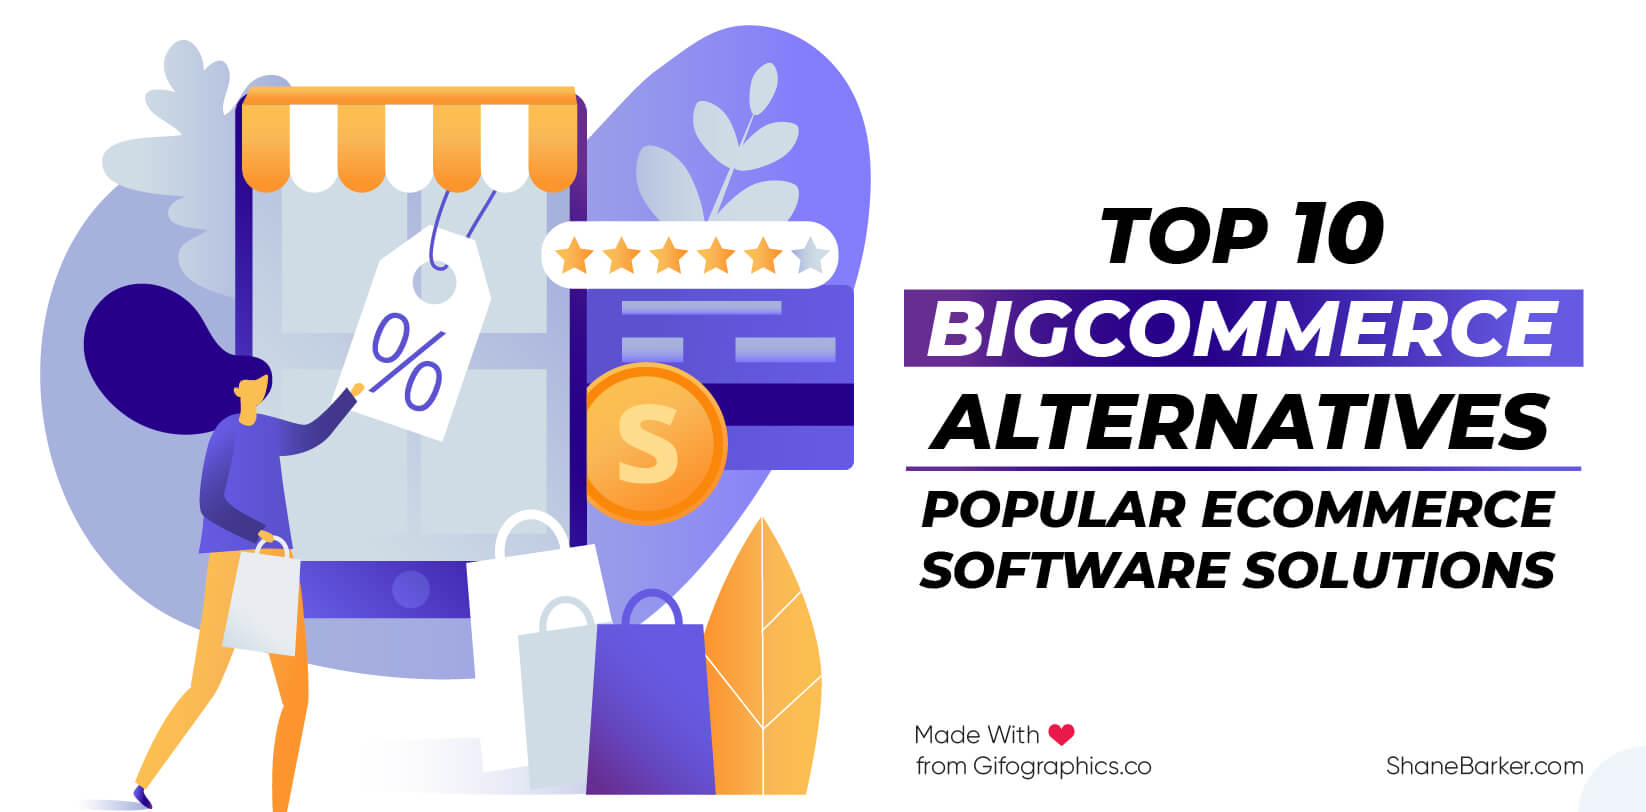 Top 10 BigCommerce Alternatives: Popular Ecommerce Software Solutions